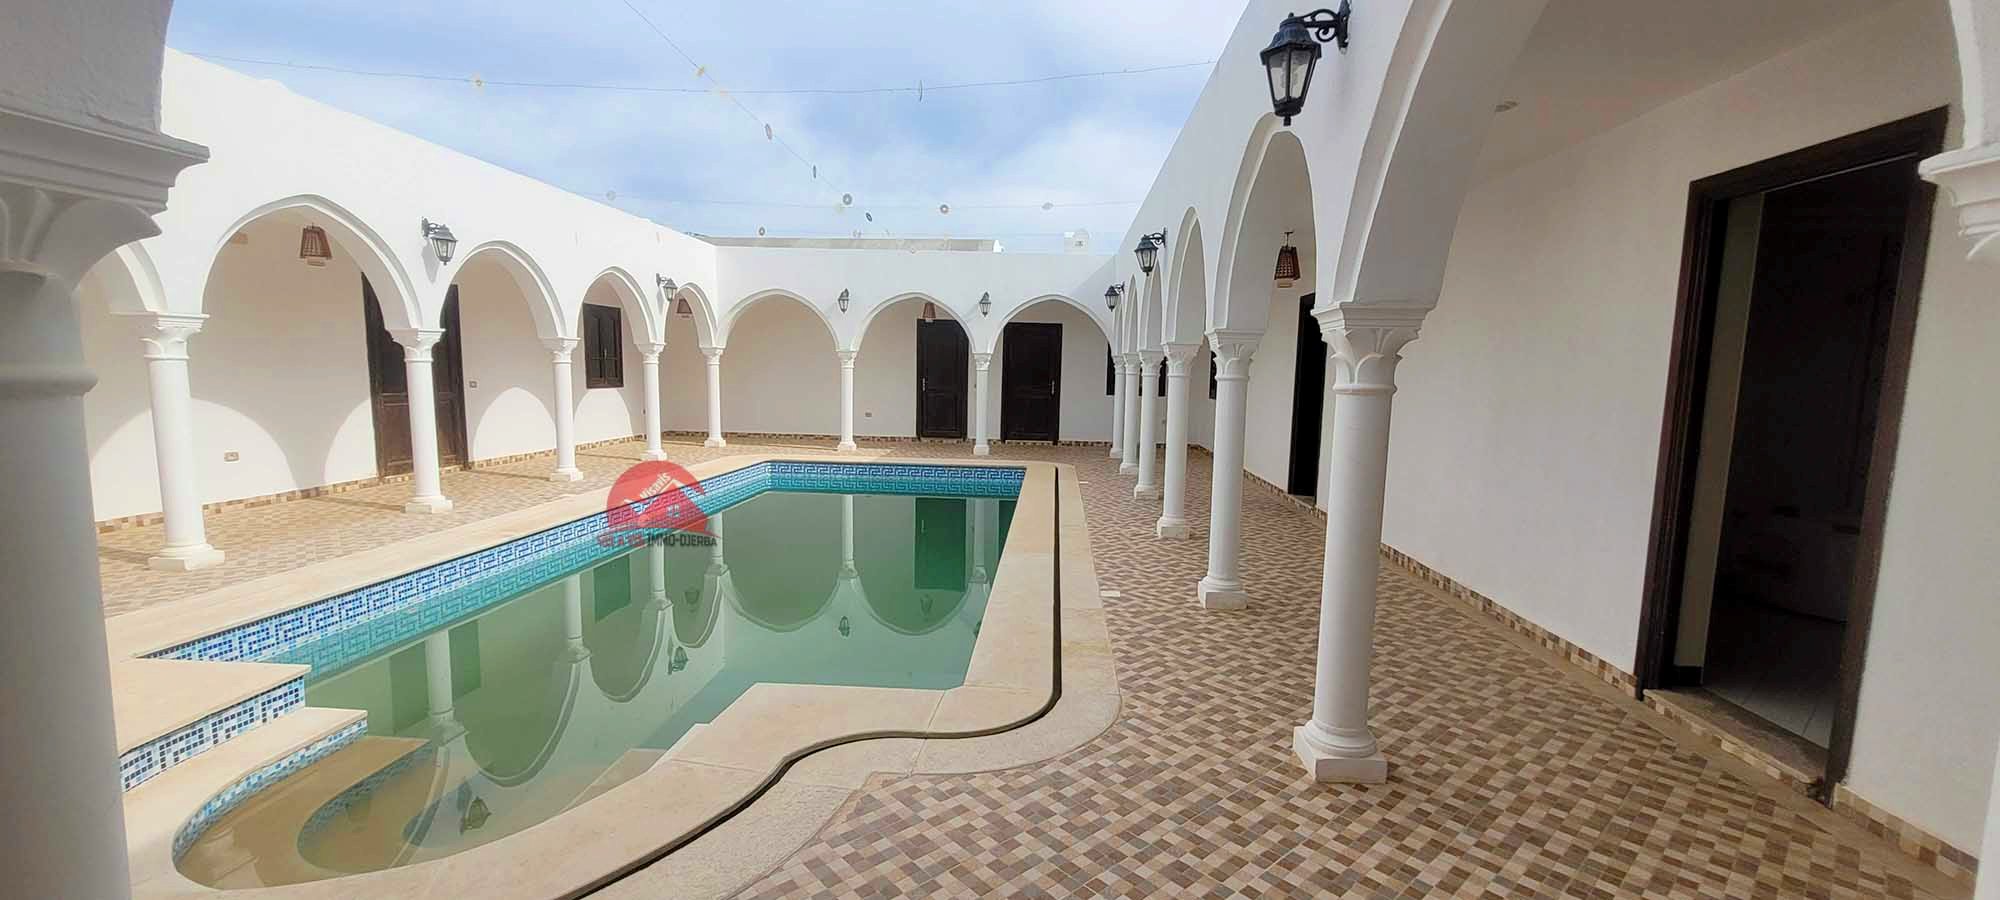 Djerba - Houmet Essouk Ghizen Vente Maisons Houch djerbien avec piscine  titre bleu  ref h670